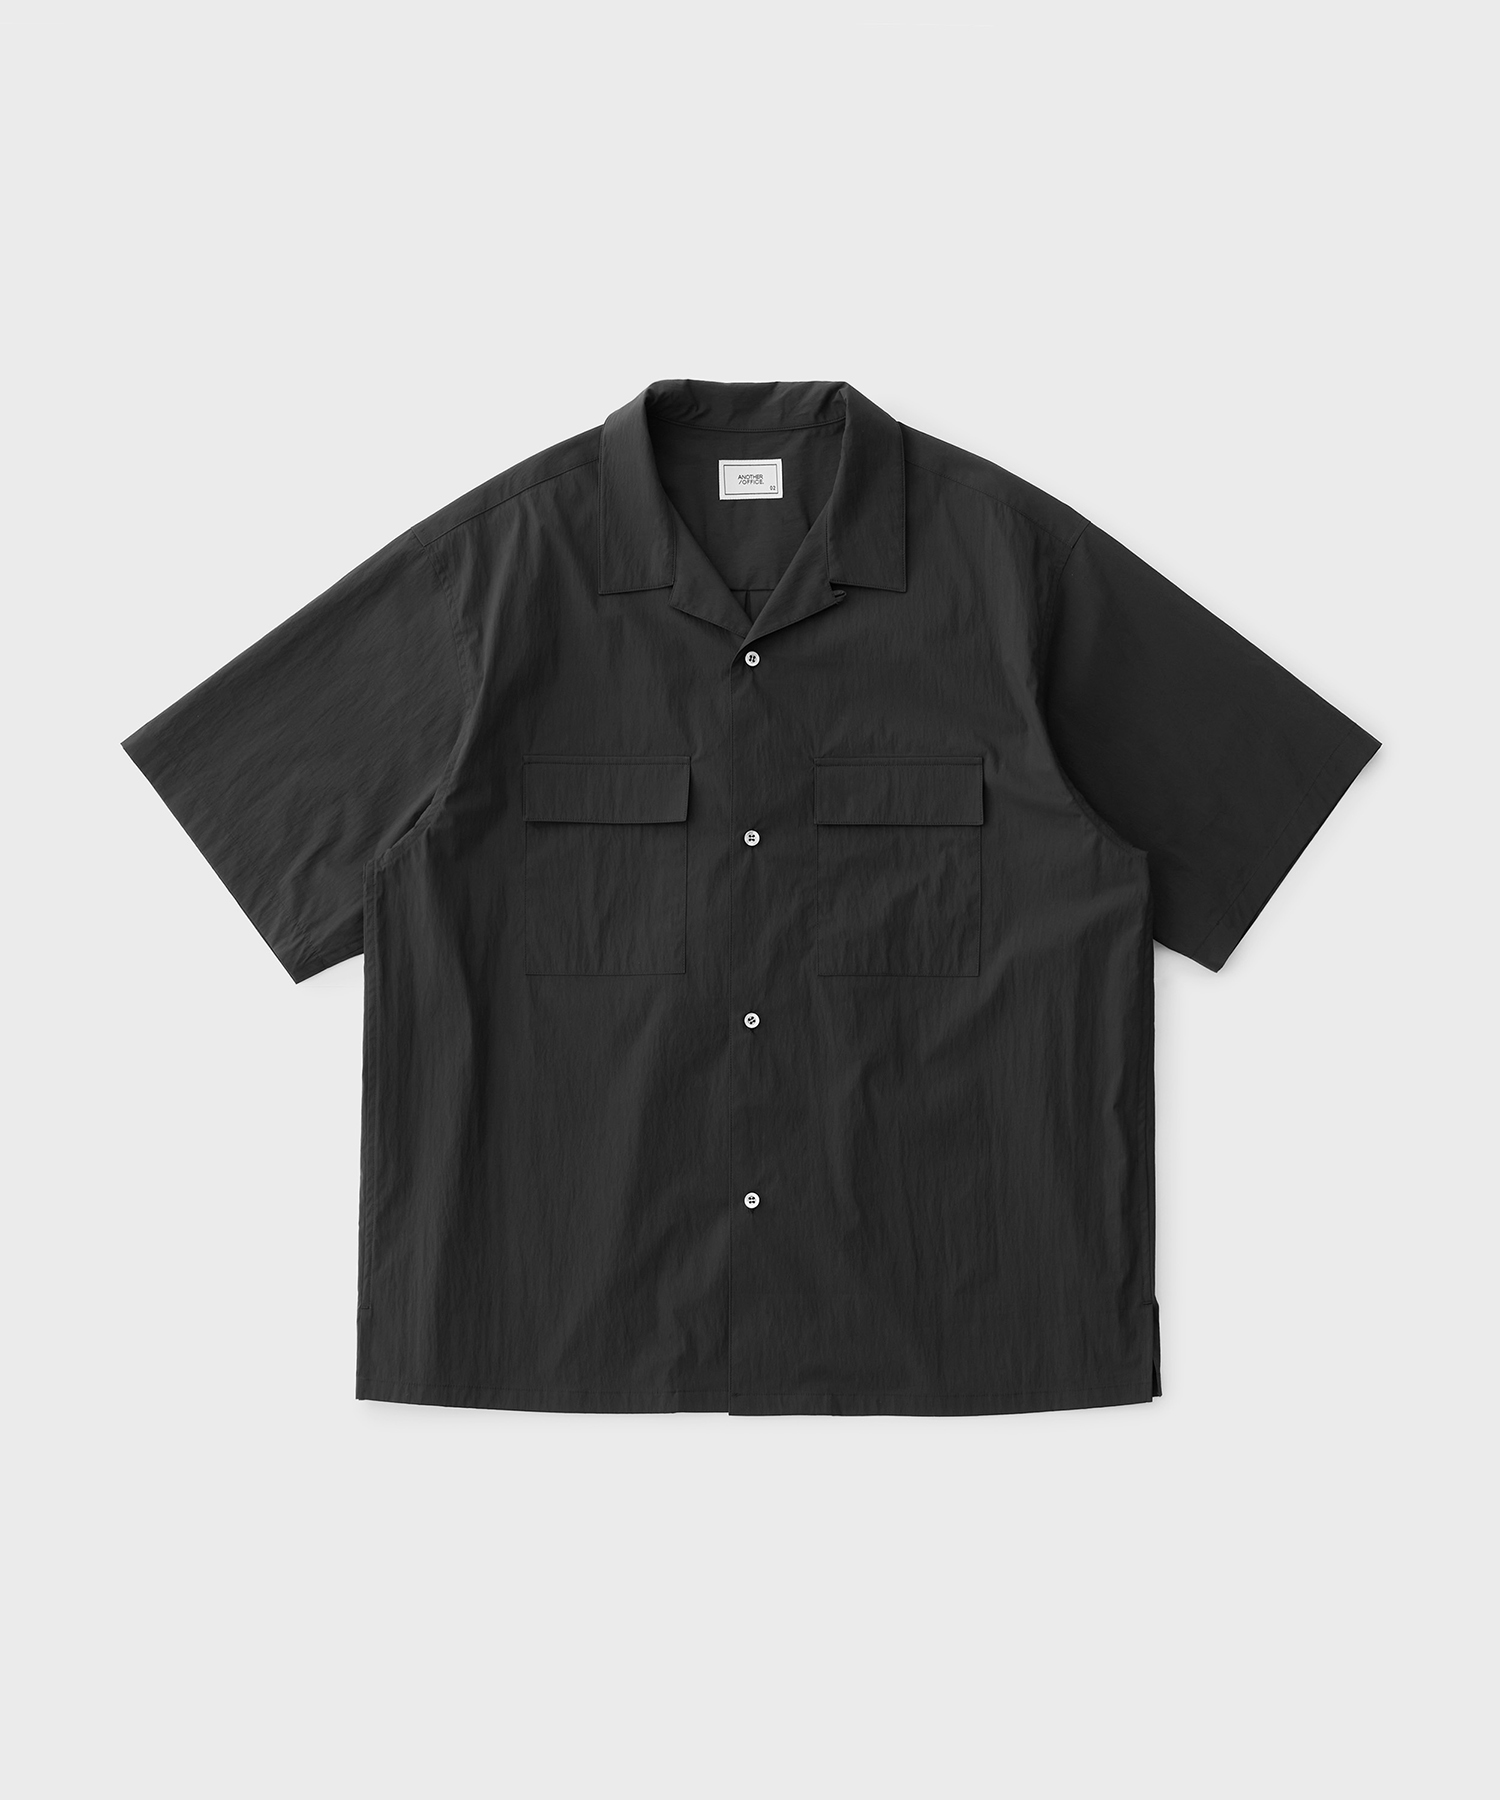 Voyager Shirt - Jacket (Black)